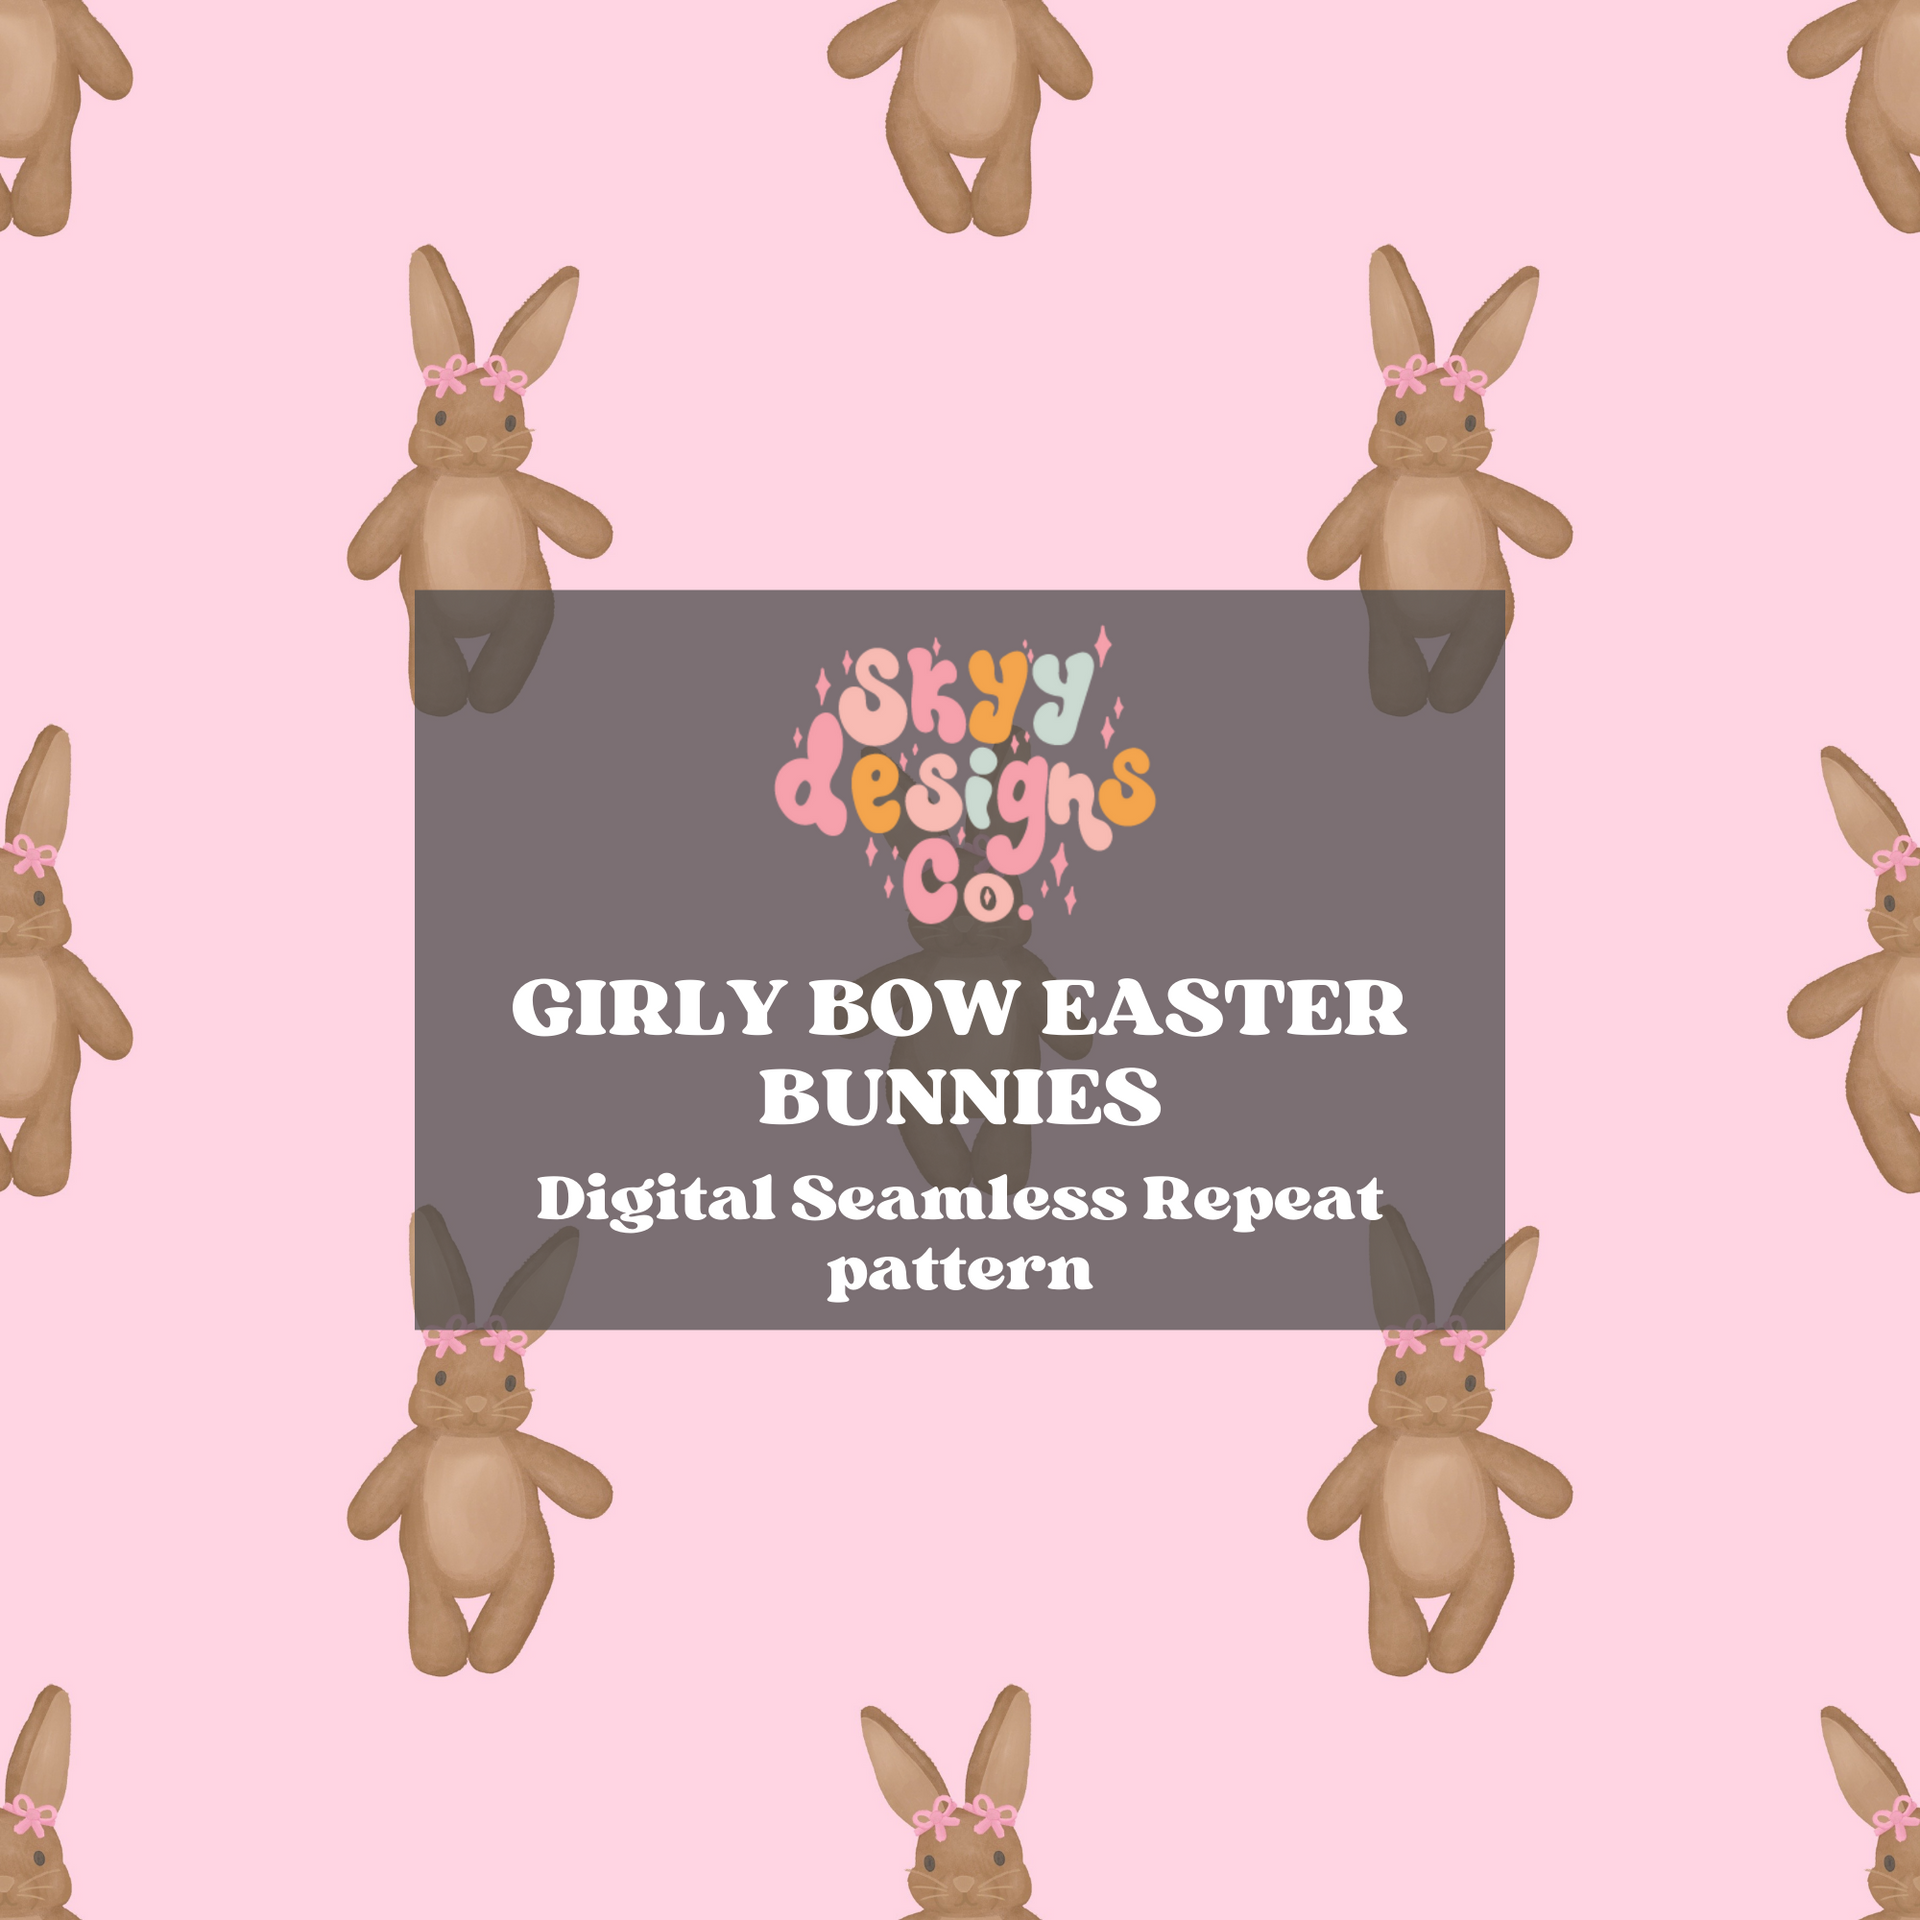 Dear Easter Bunny Letter Interactive PYO Digital Design * – Stencil  Expressions